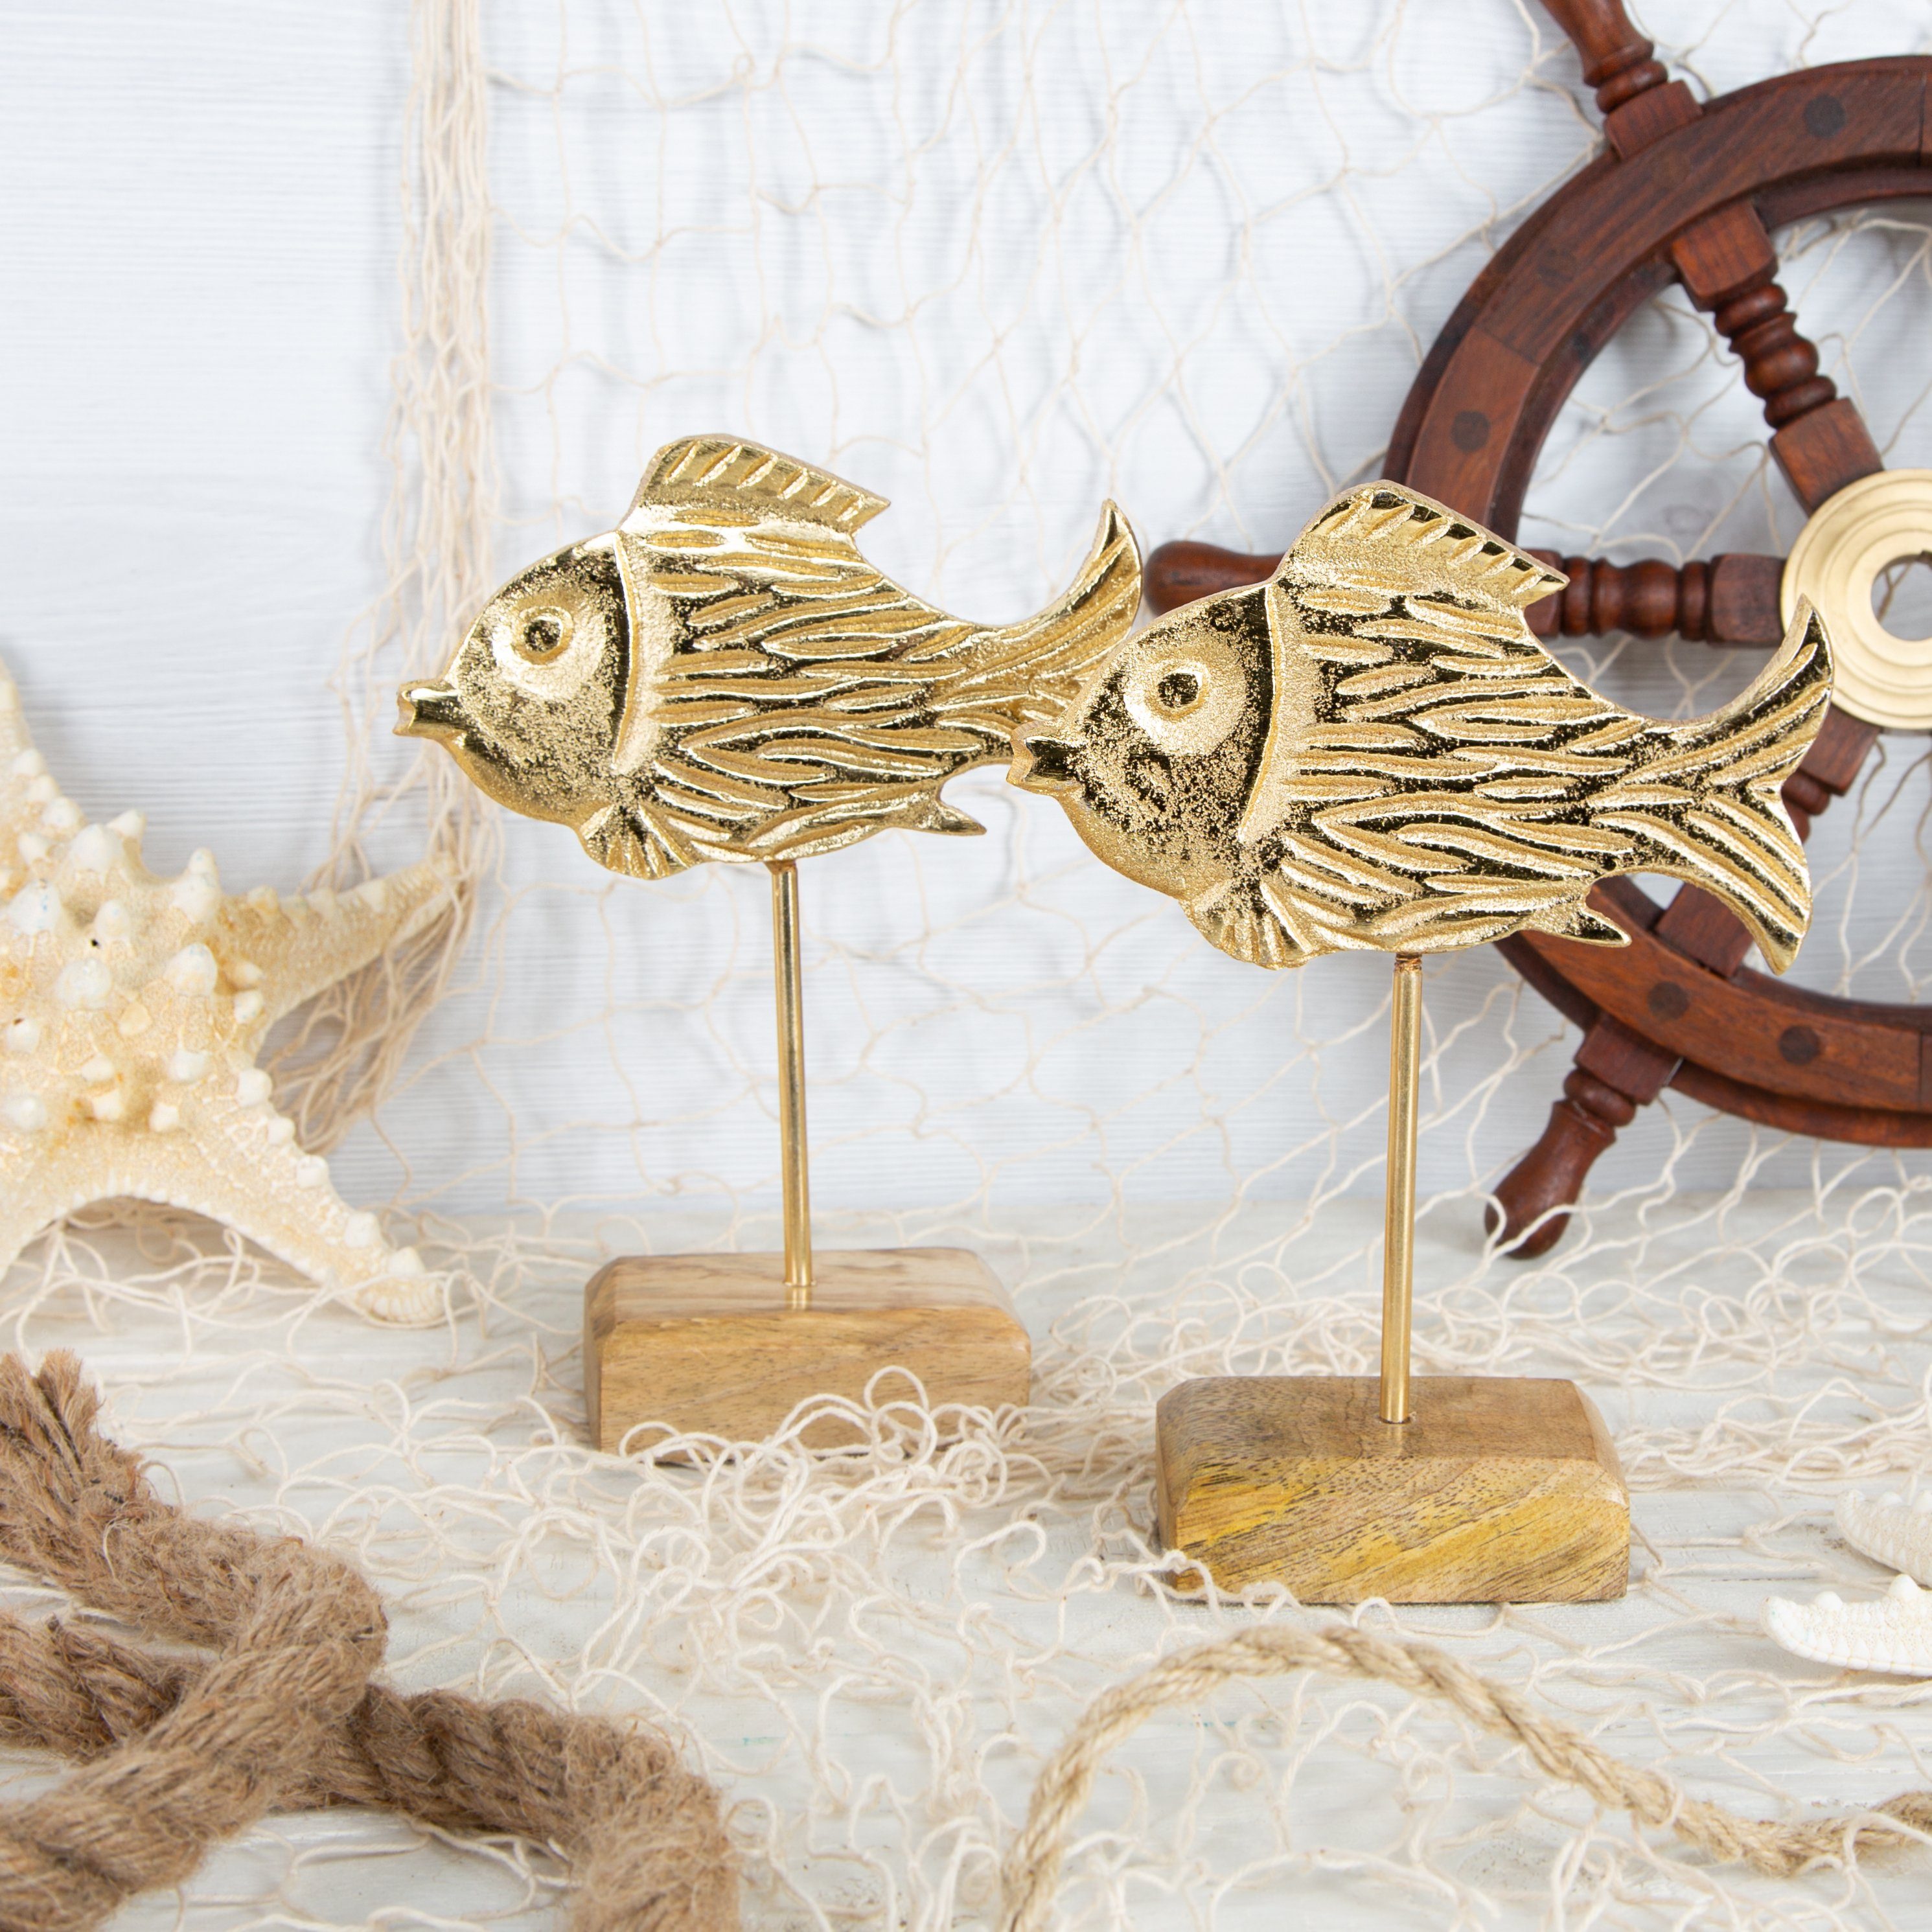 Metall Fische 2 18 goldfarben aus (Set, edle St), 2 Logbuch-Verlag cm Maritime lackiert Figuren Metall 2 Deko Dekofigur Figuren